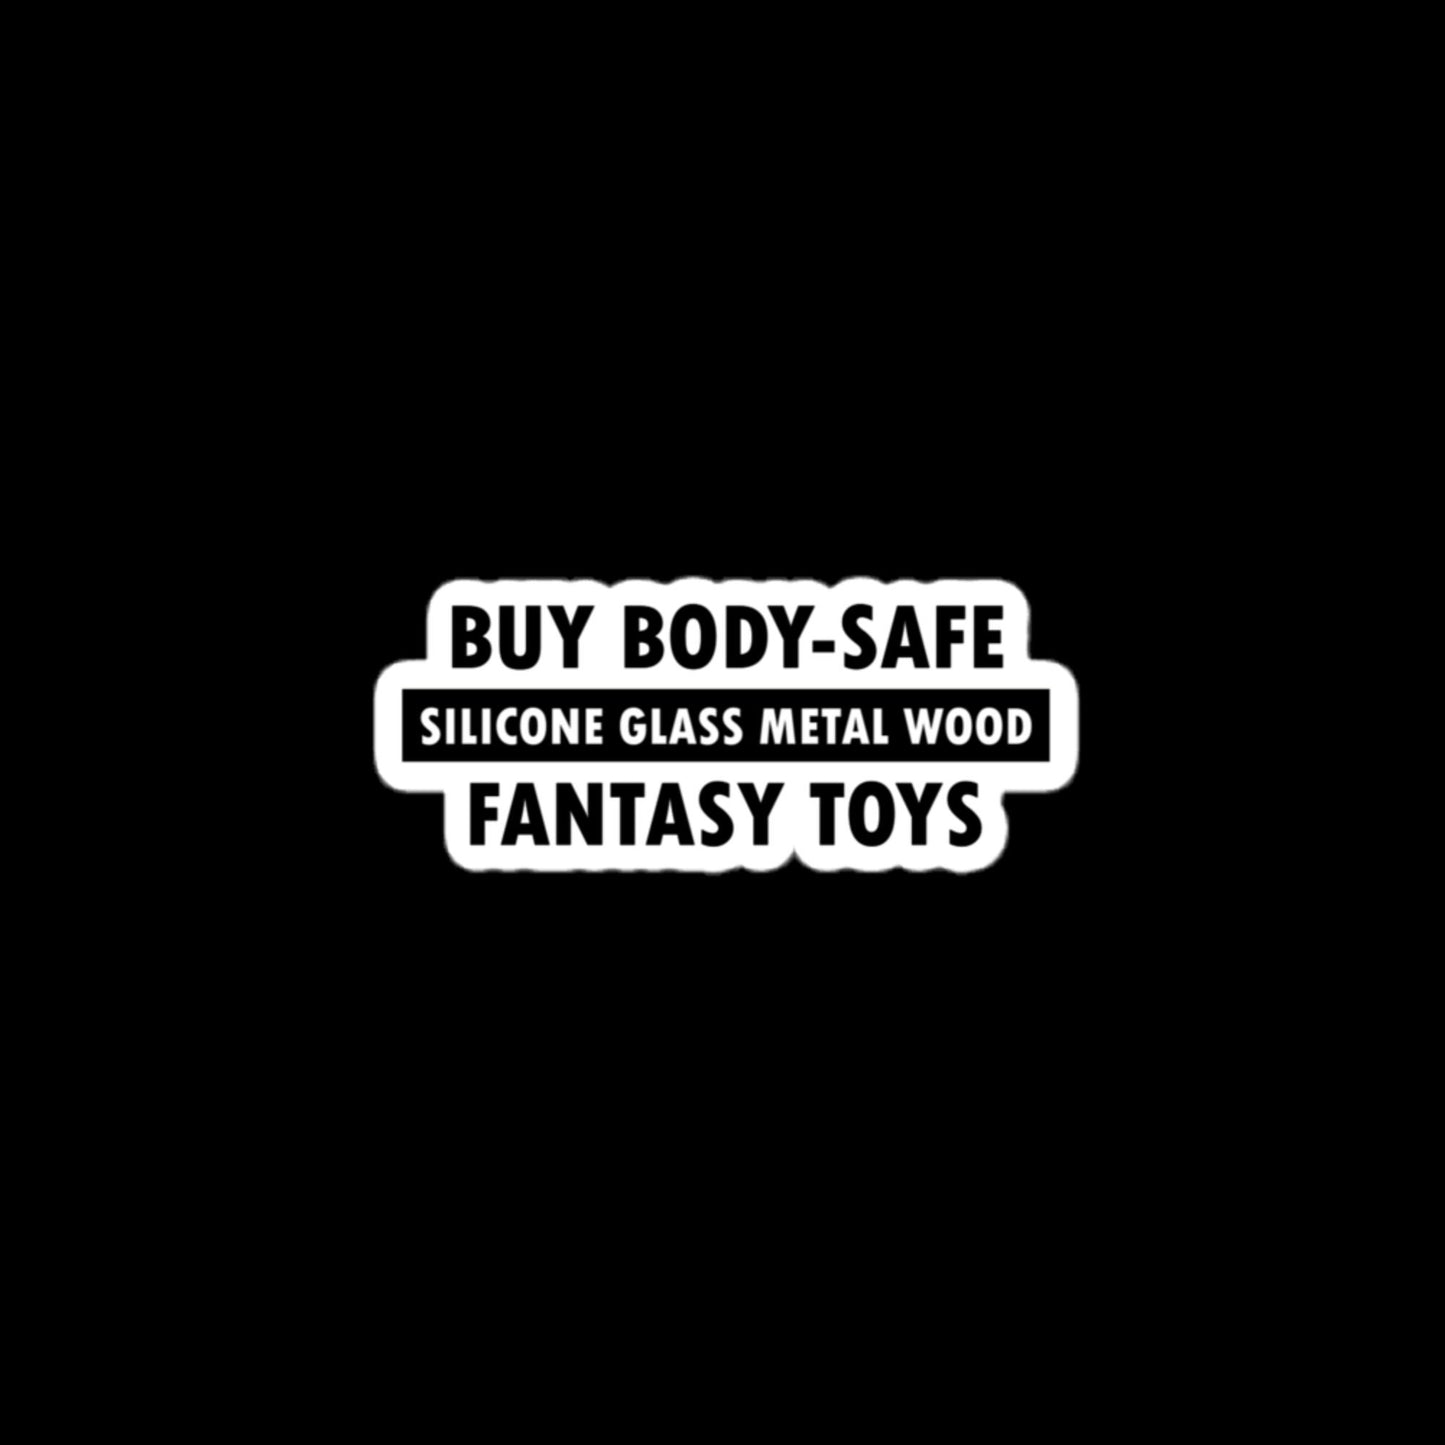 Buy Body-Safe Fantasy Toys Stickers (Black on White)